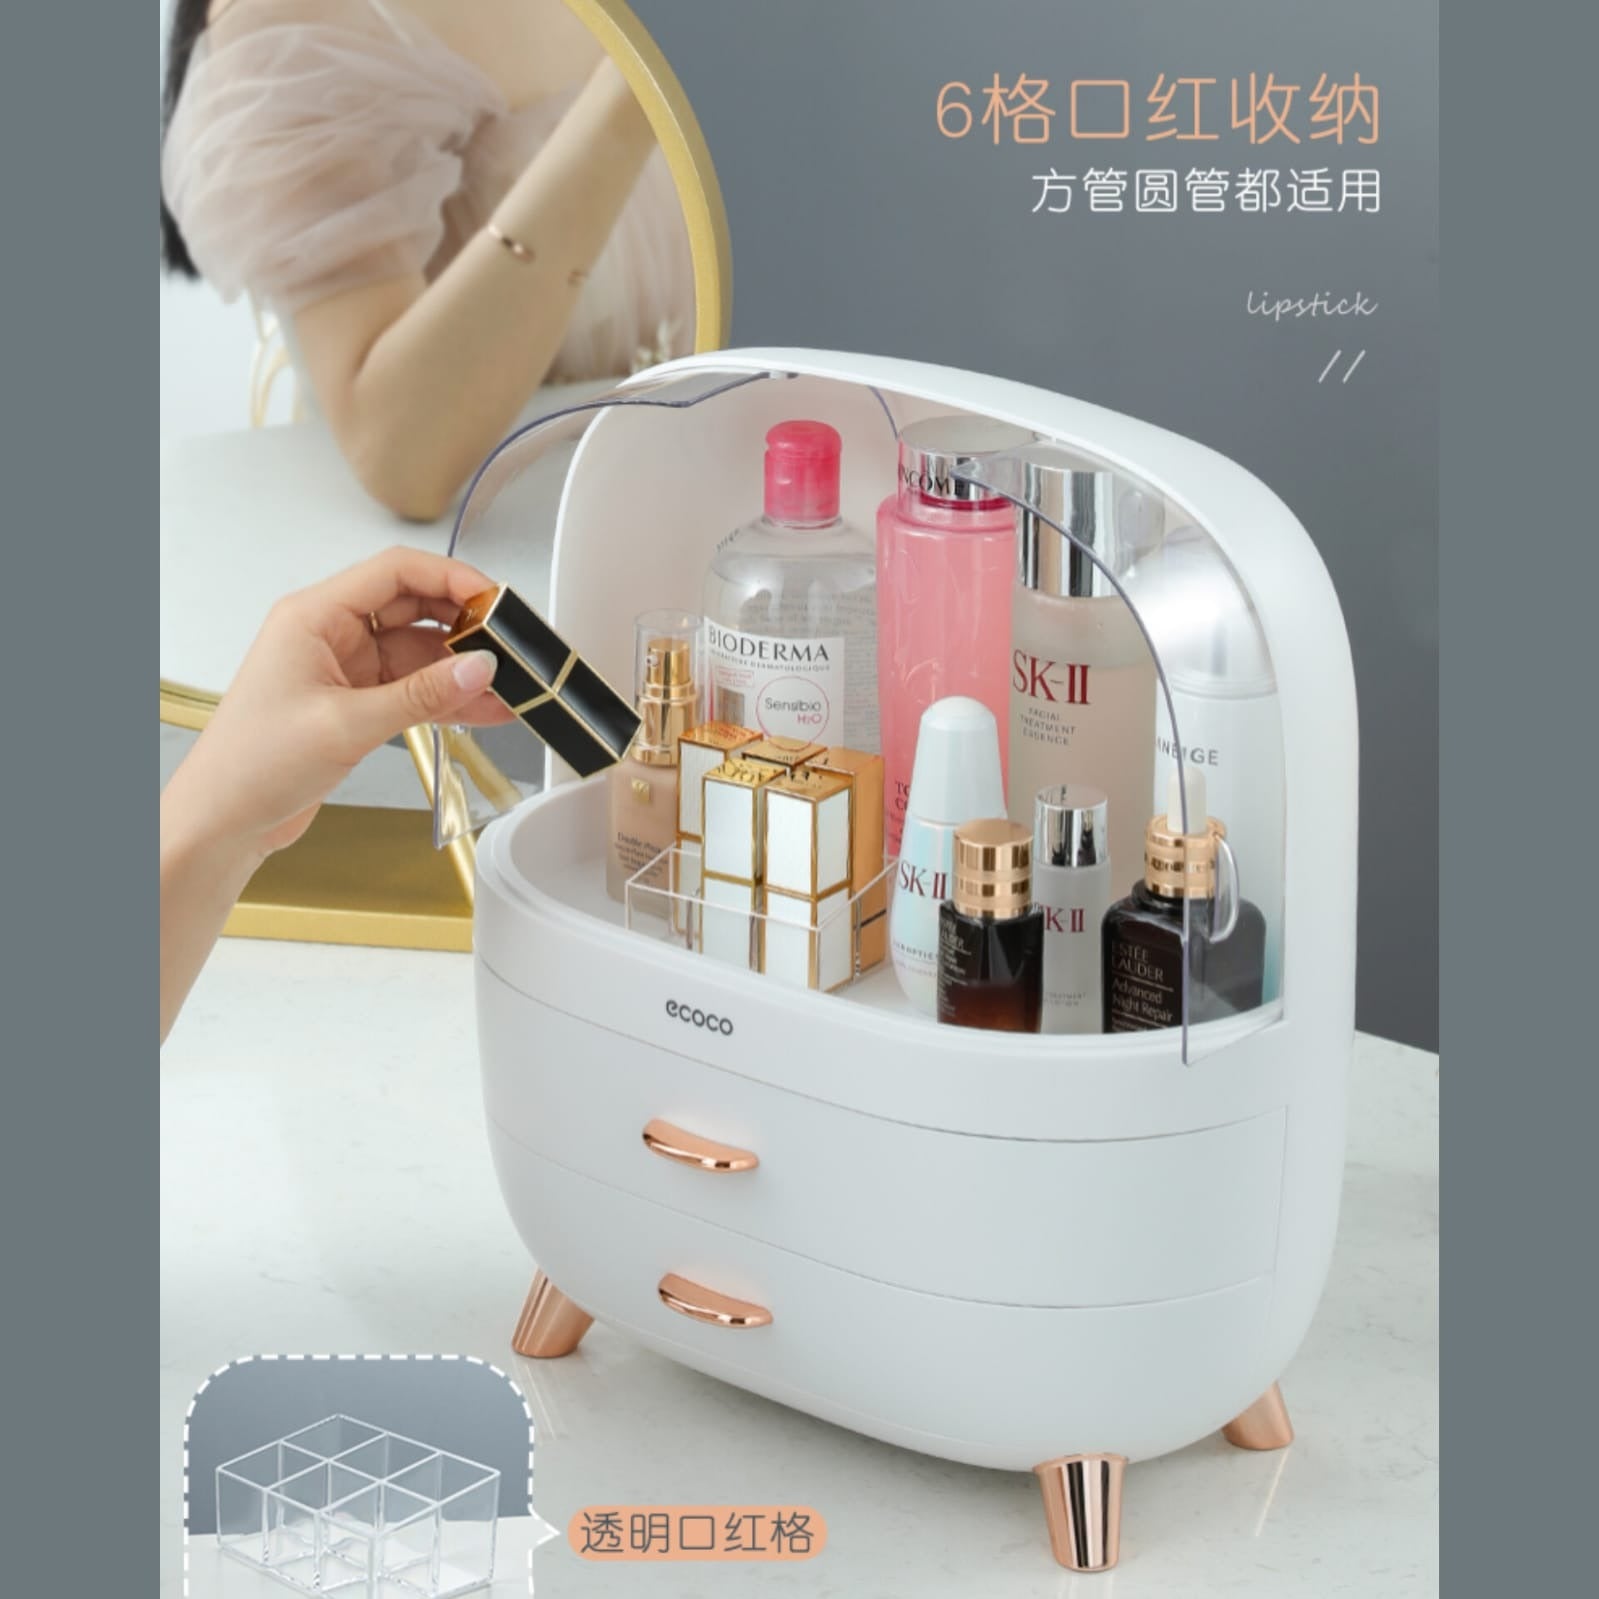 Ecoco Makeup Storage Organizer Box With Lifecycle Hooks Angular